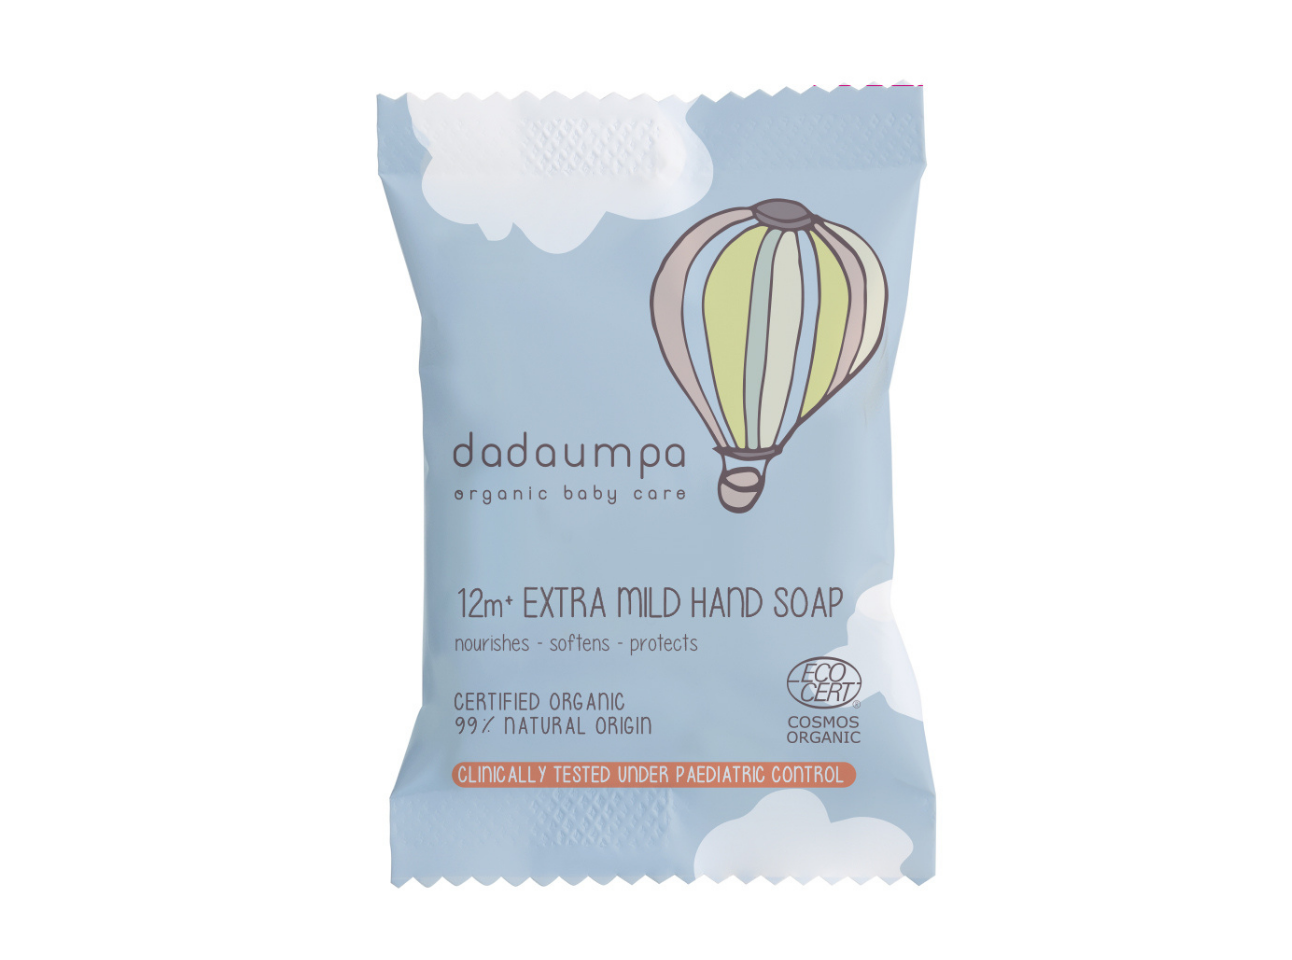 Dadaumpa 12M+ Extra milde Stückseife - 20g im Flow-Pack